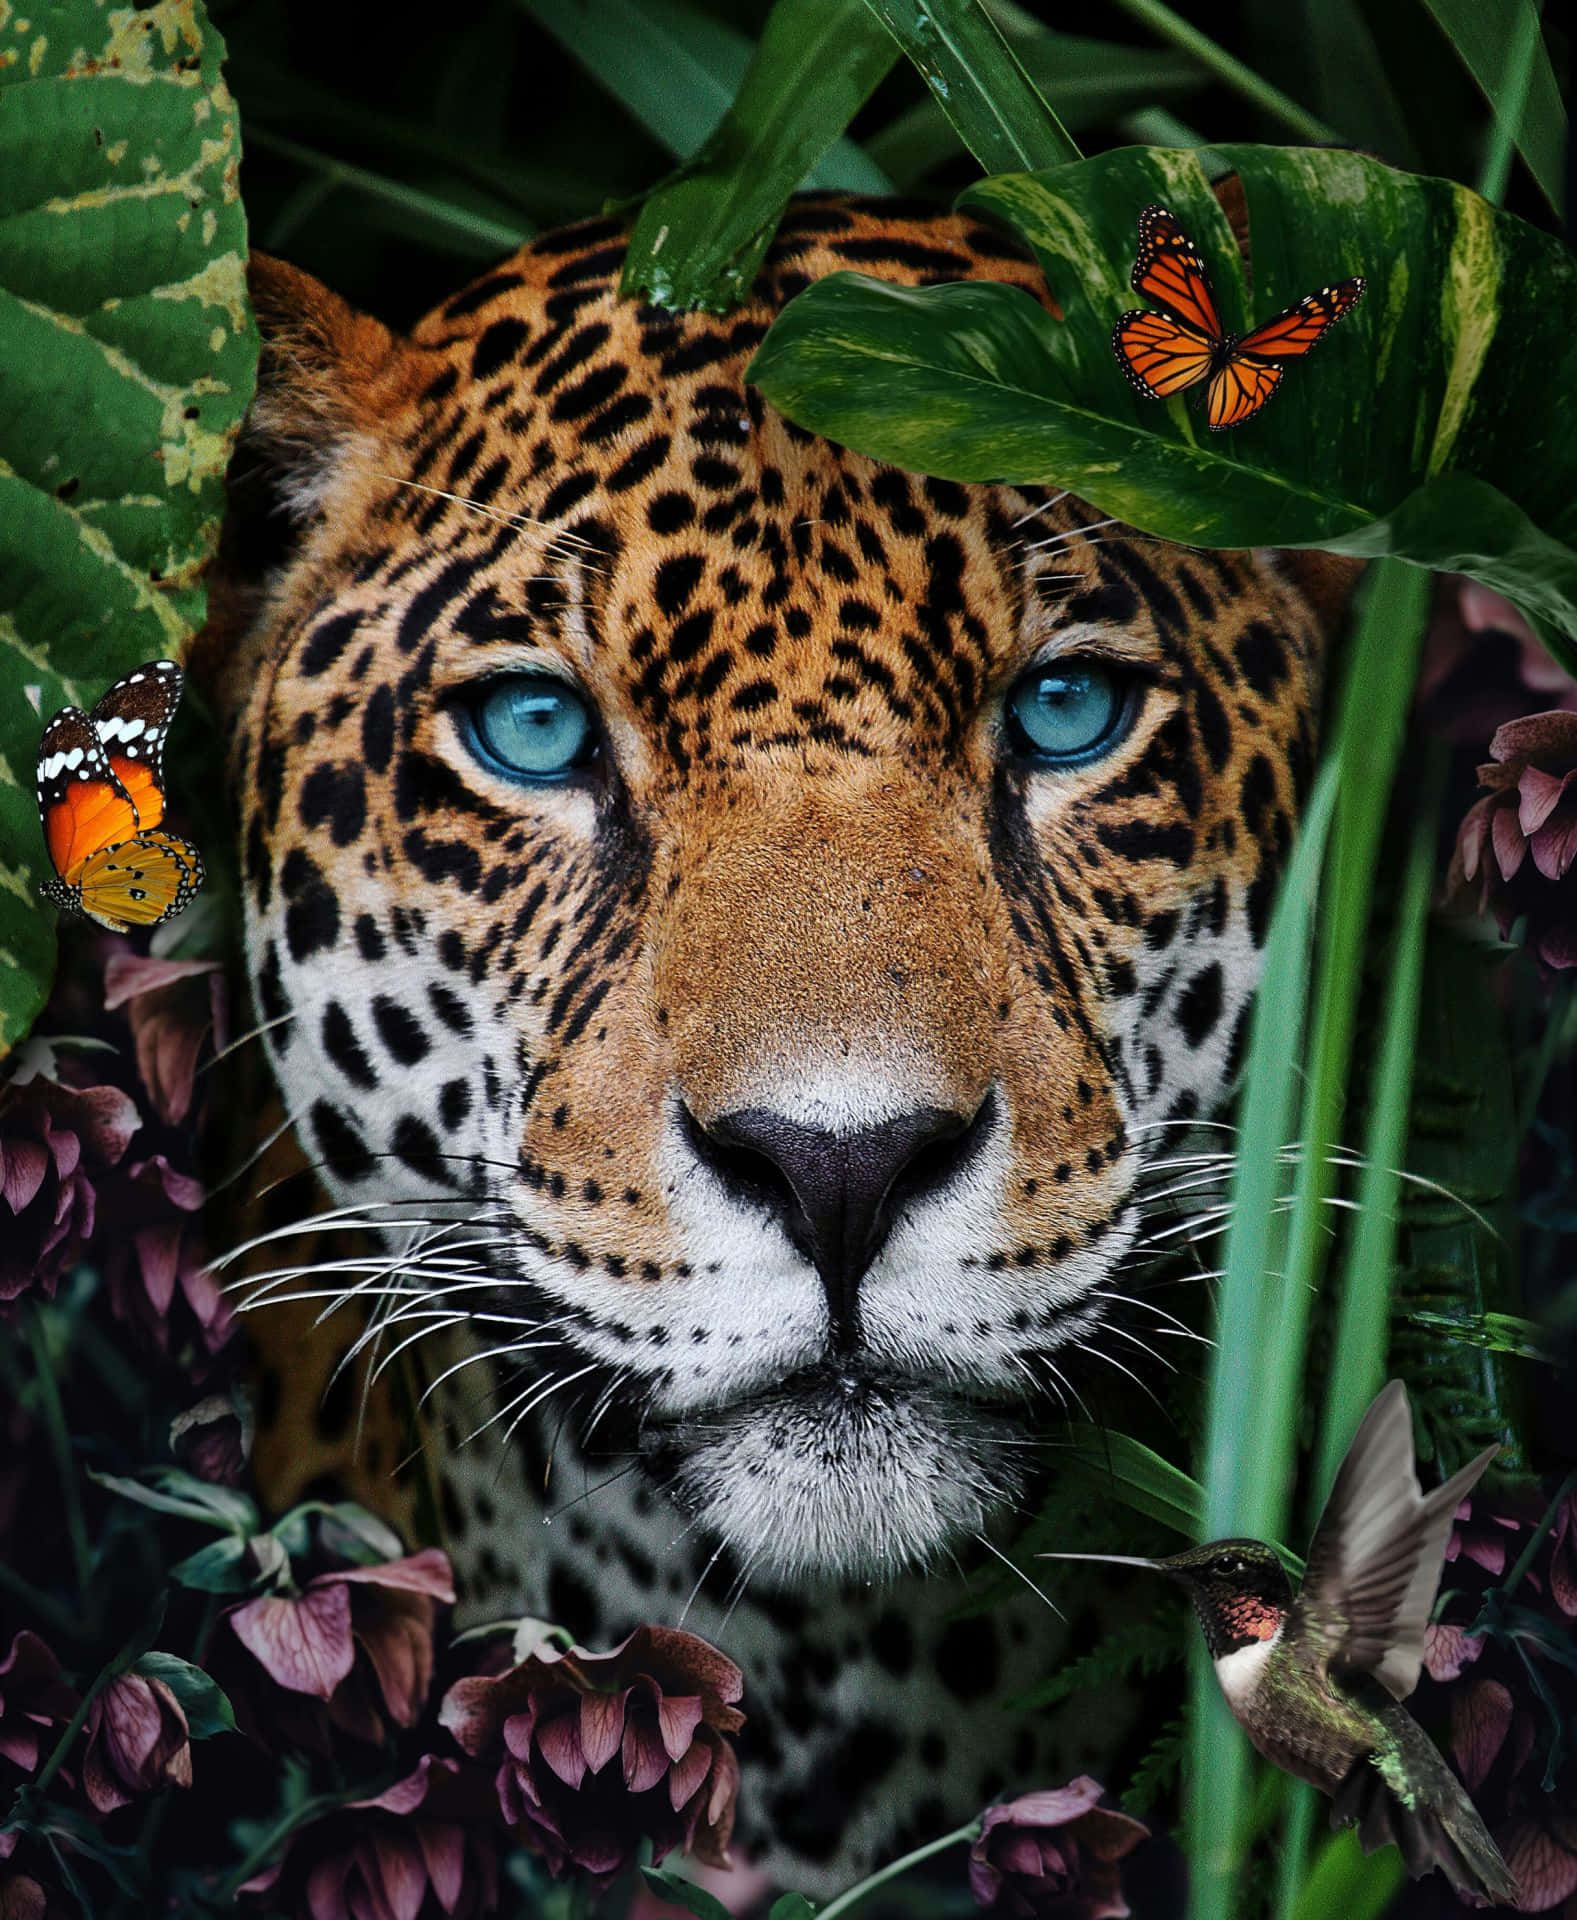 Enafrikansk Leopard I Sit Naturlige Habitat.